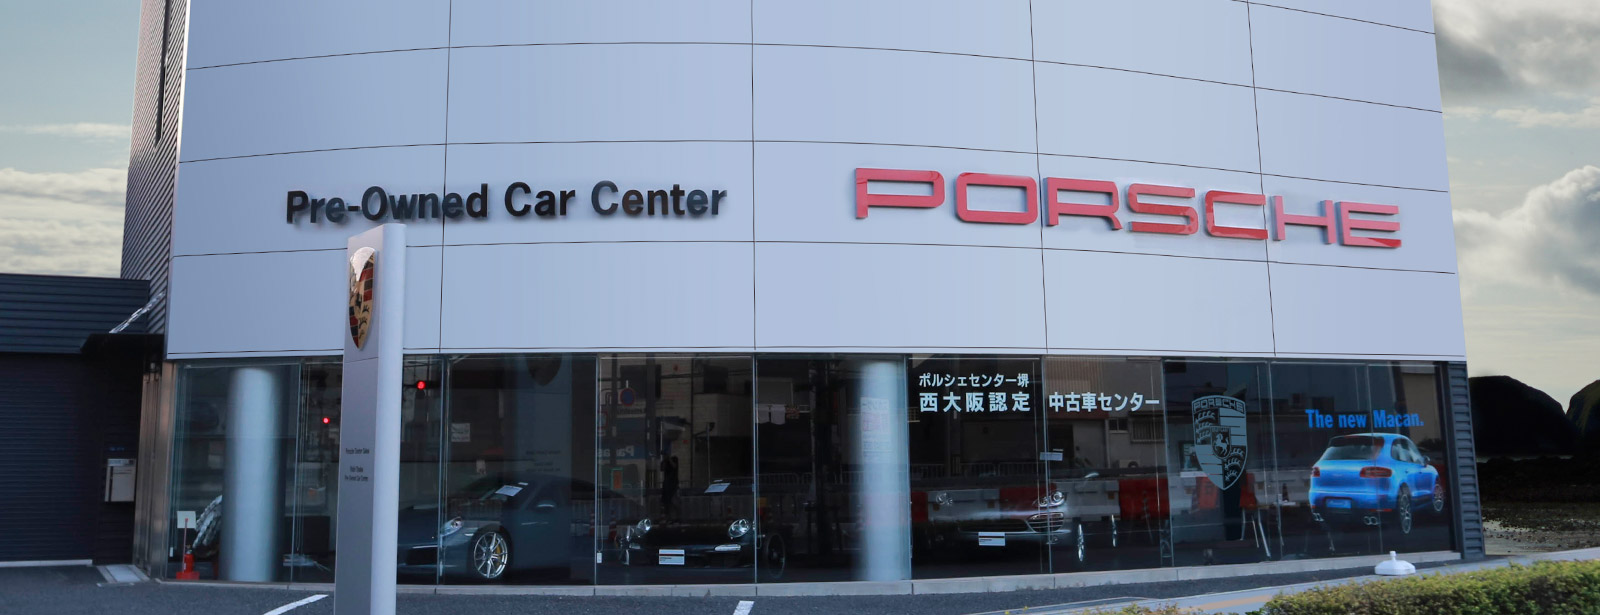 Porsche Pre-Owned Car Center Nishi Osaka.